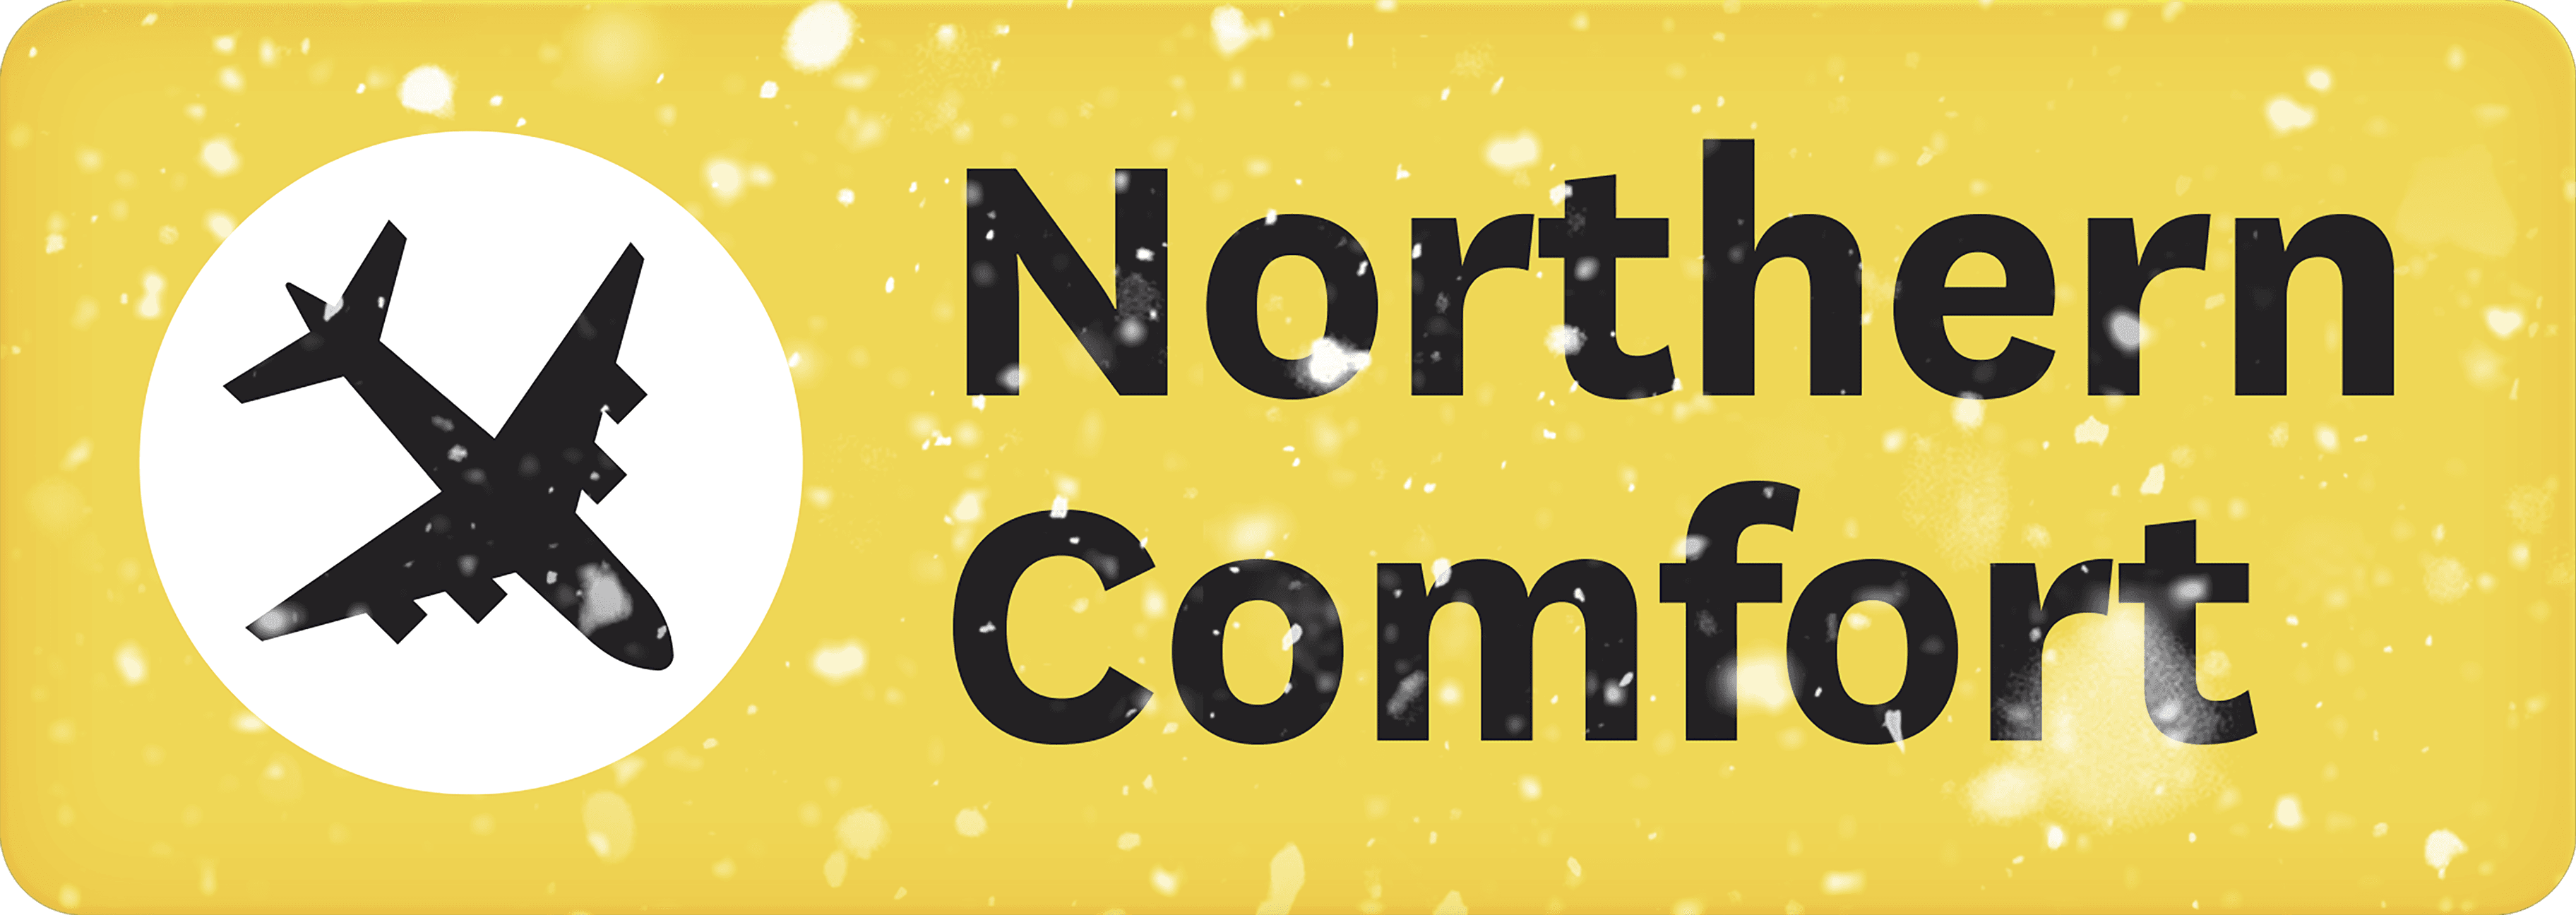 Northern Comfort logo